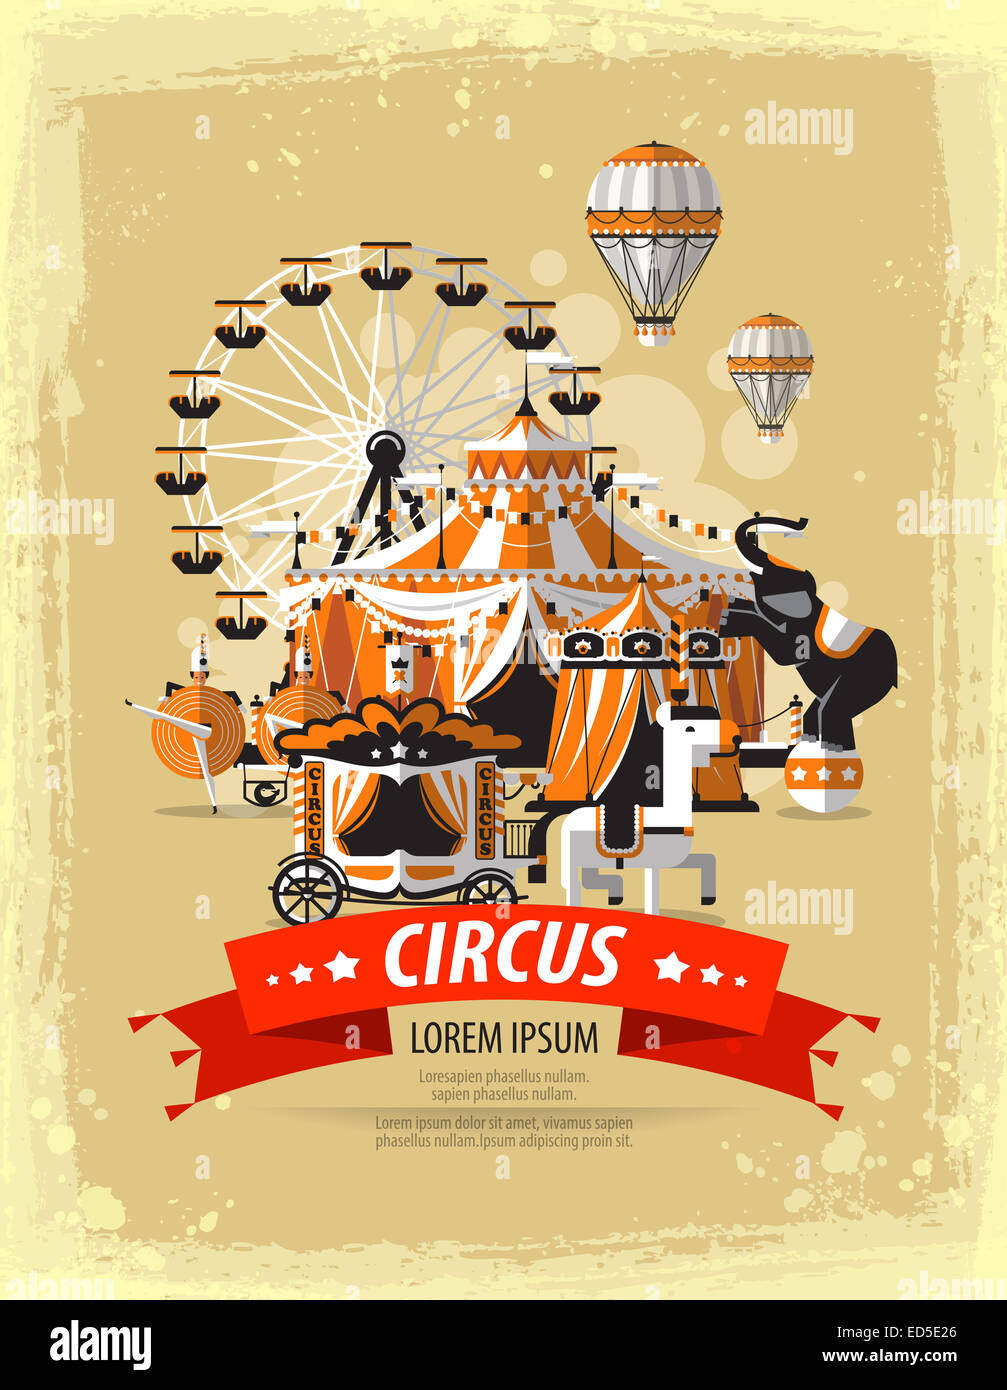 circus, fairground, carnival. vector illustration Stock Photo